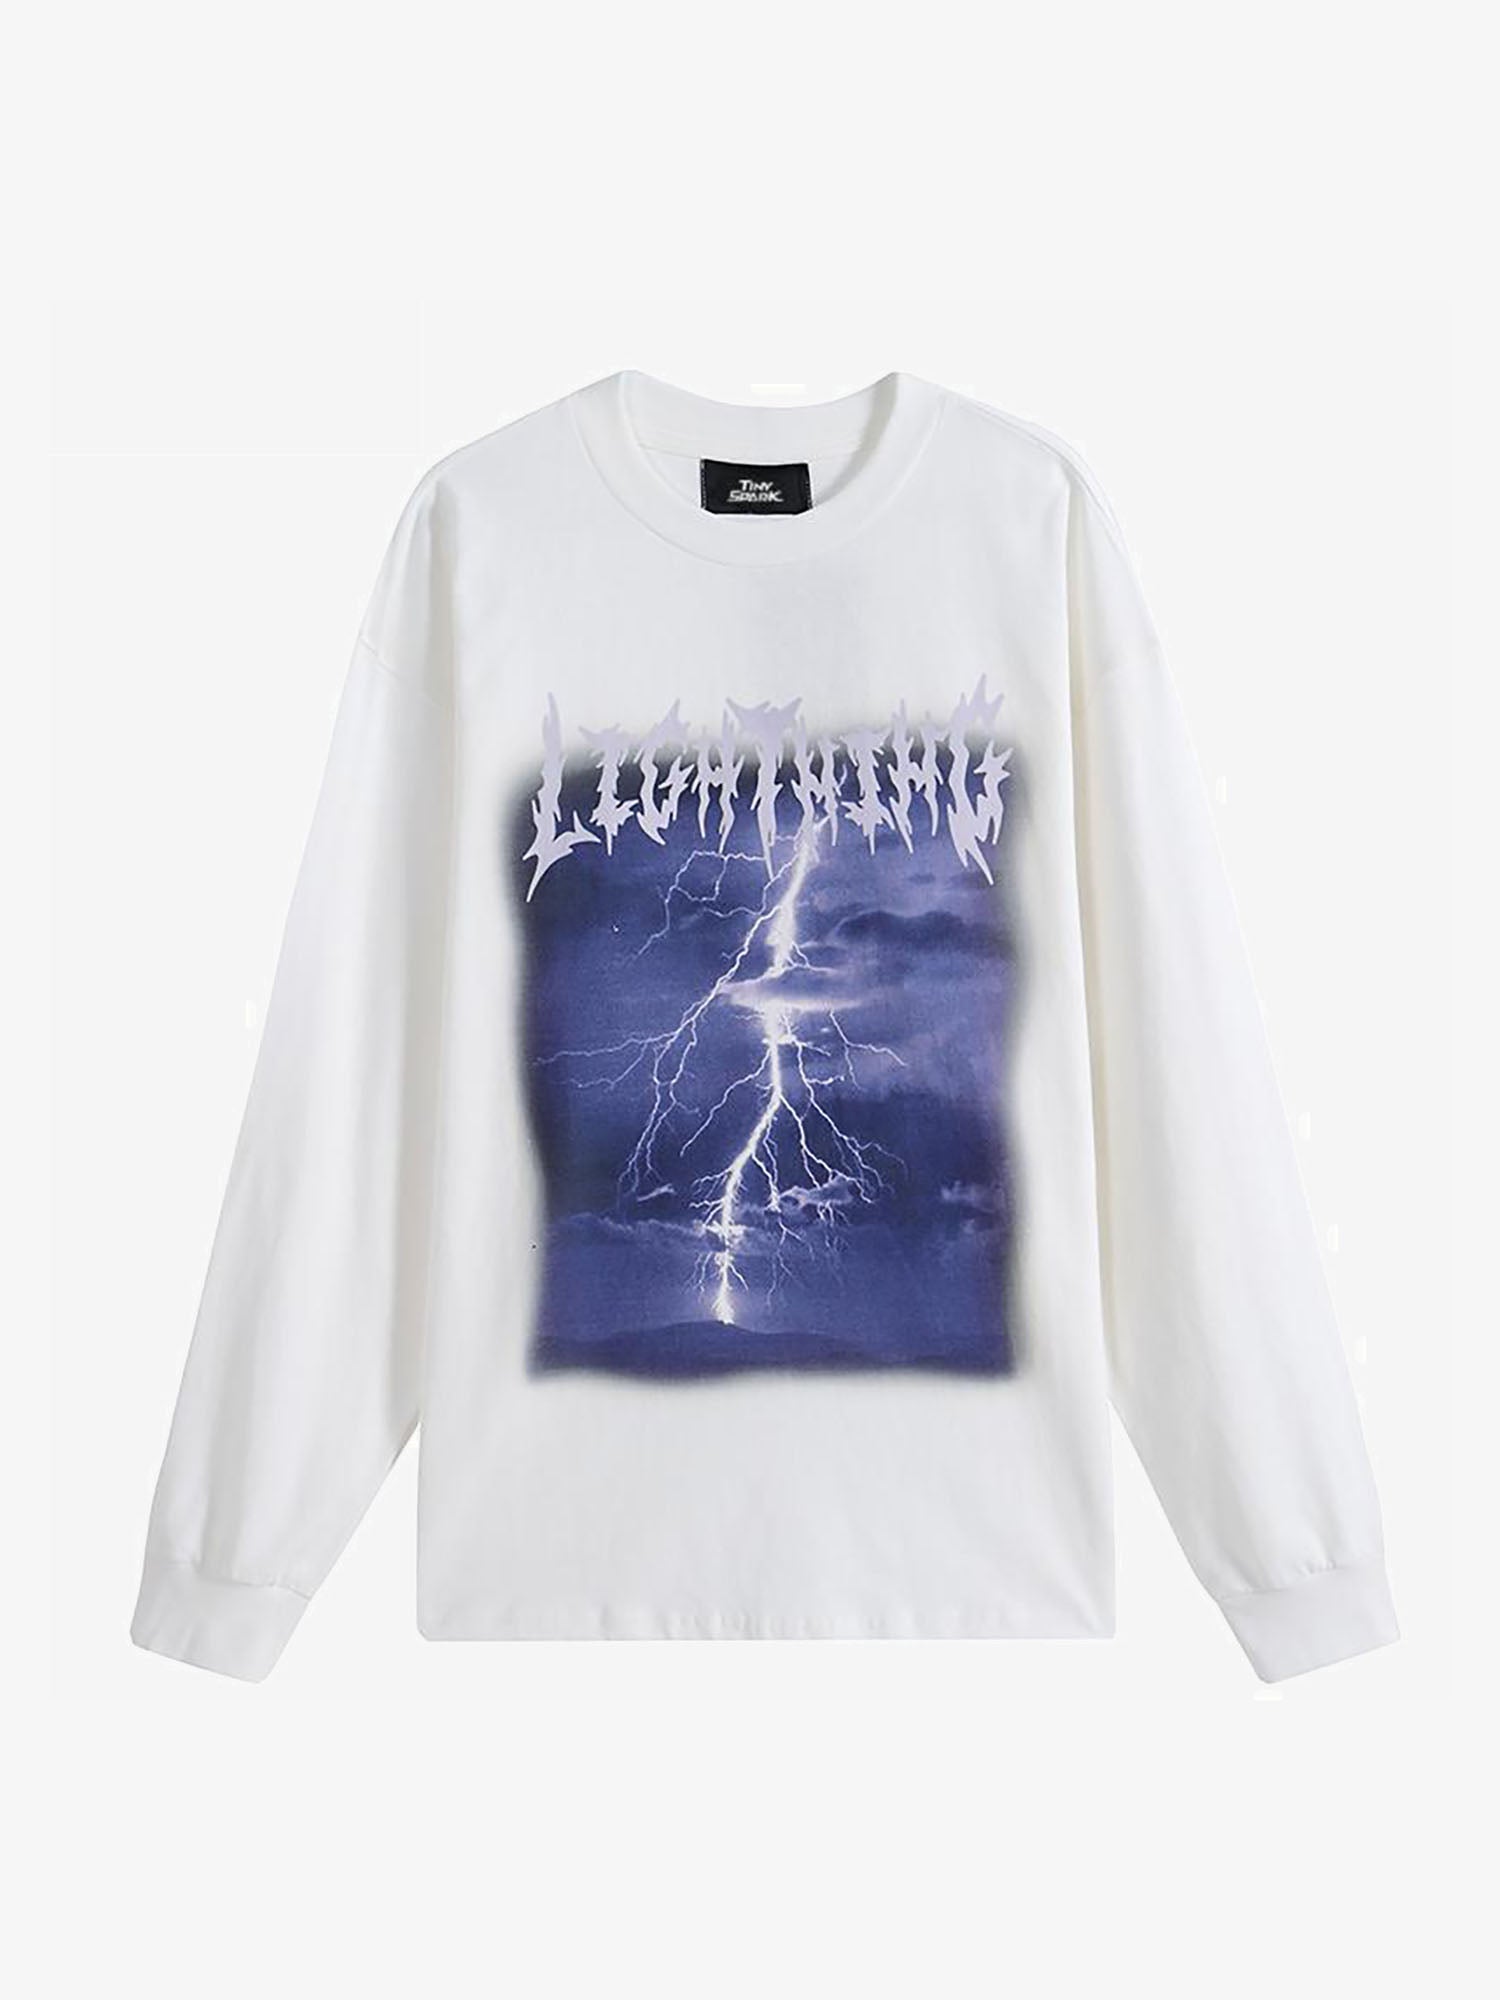 Justnotag Night Sky Lightning Lettre Imprimé Sweatshirts